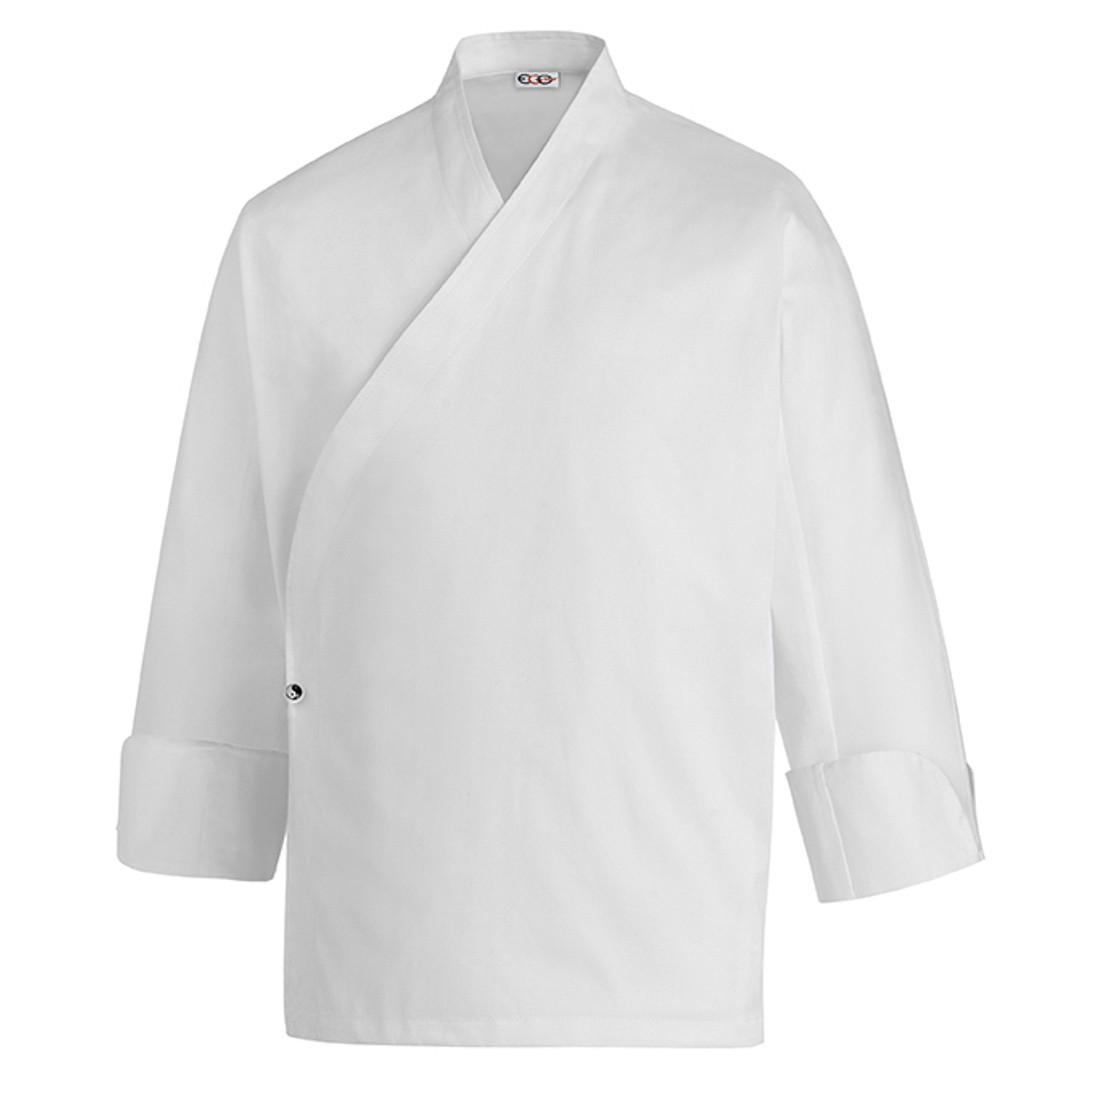 Sushi Chef's Jacket, 100% cotton - Safetywear